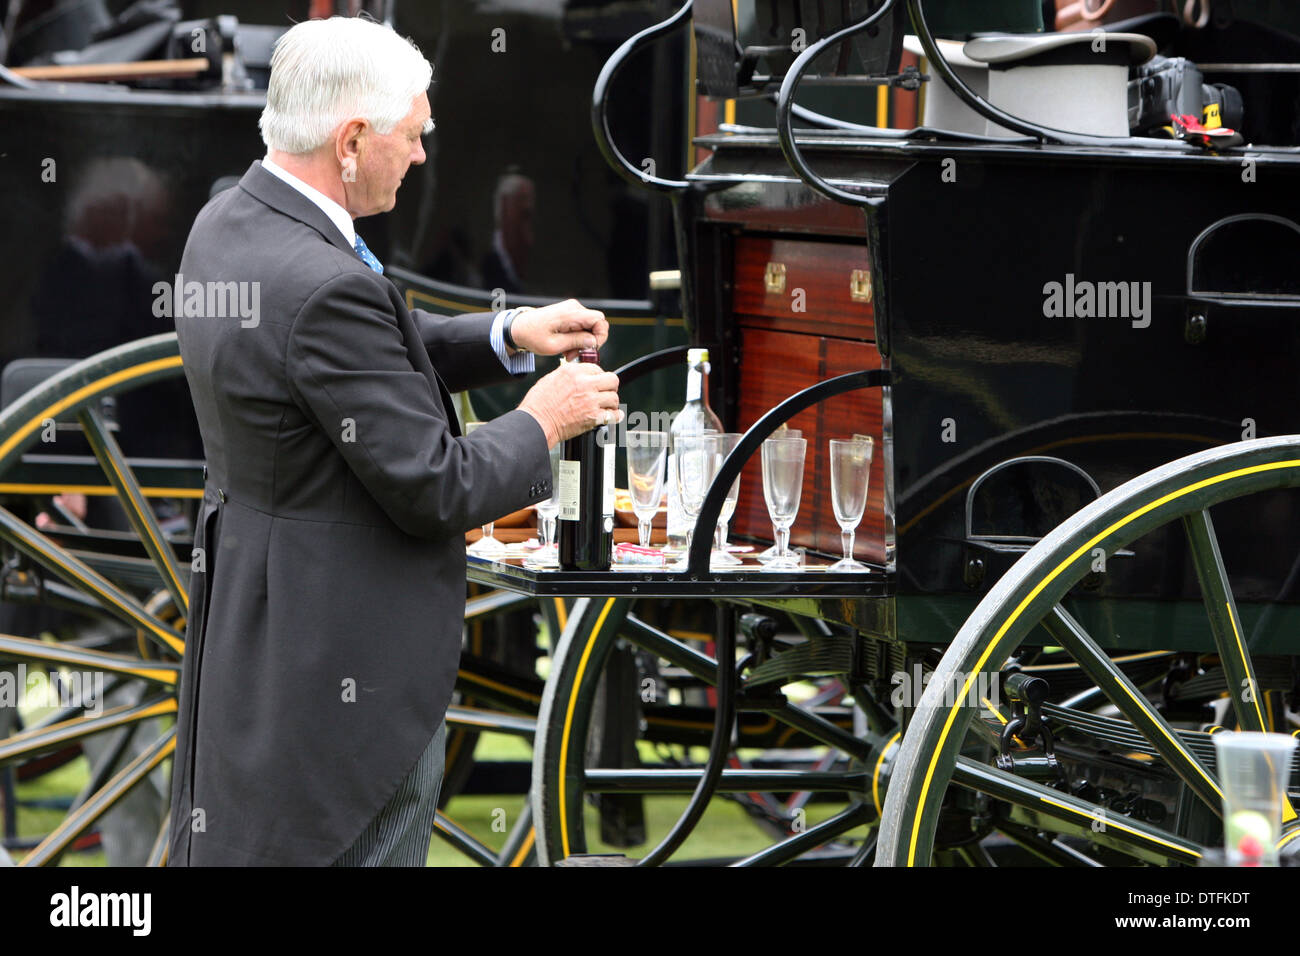 Ascot, Reino Unido, elegantemente vestida, le da a un hombre un carro vino espumoso Foto de stock